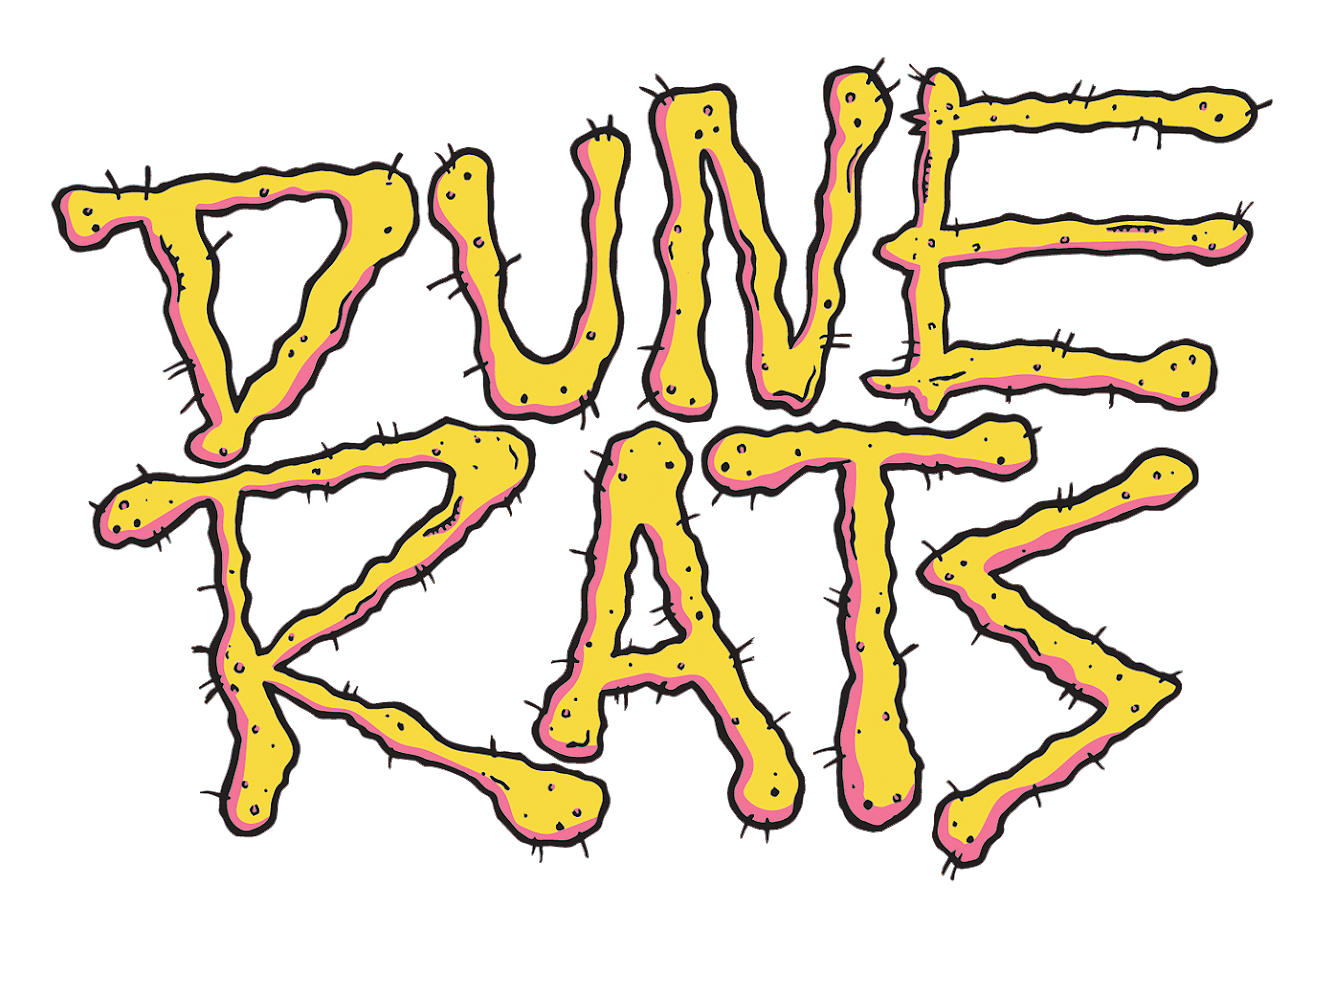 Dune Rats